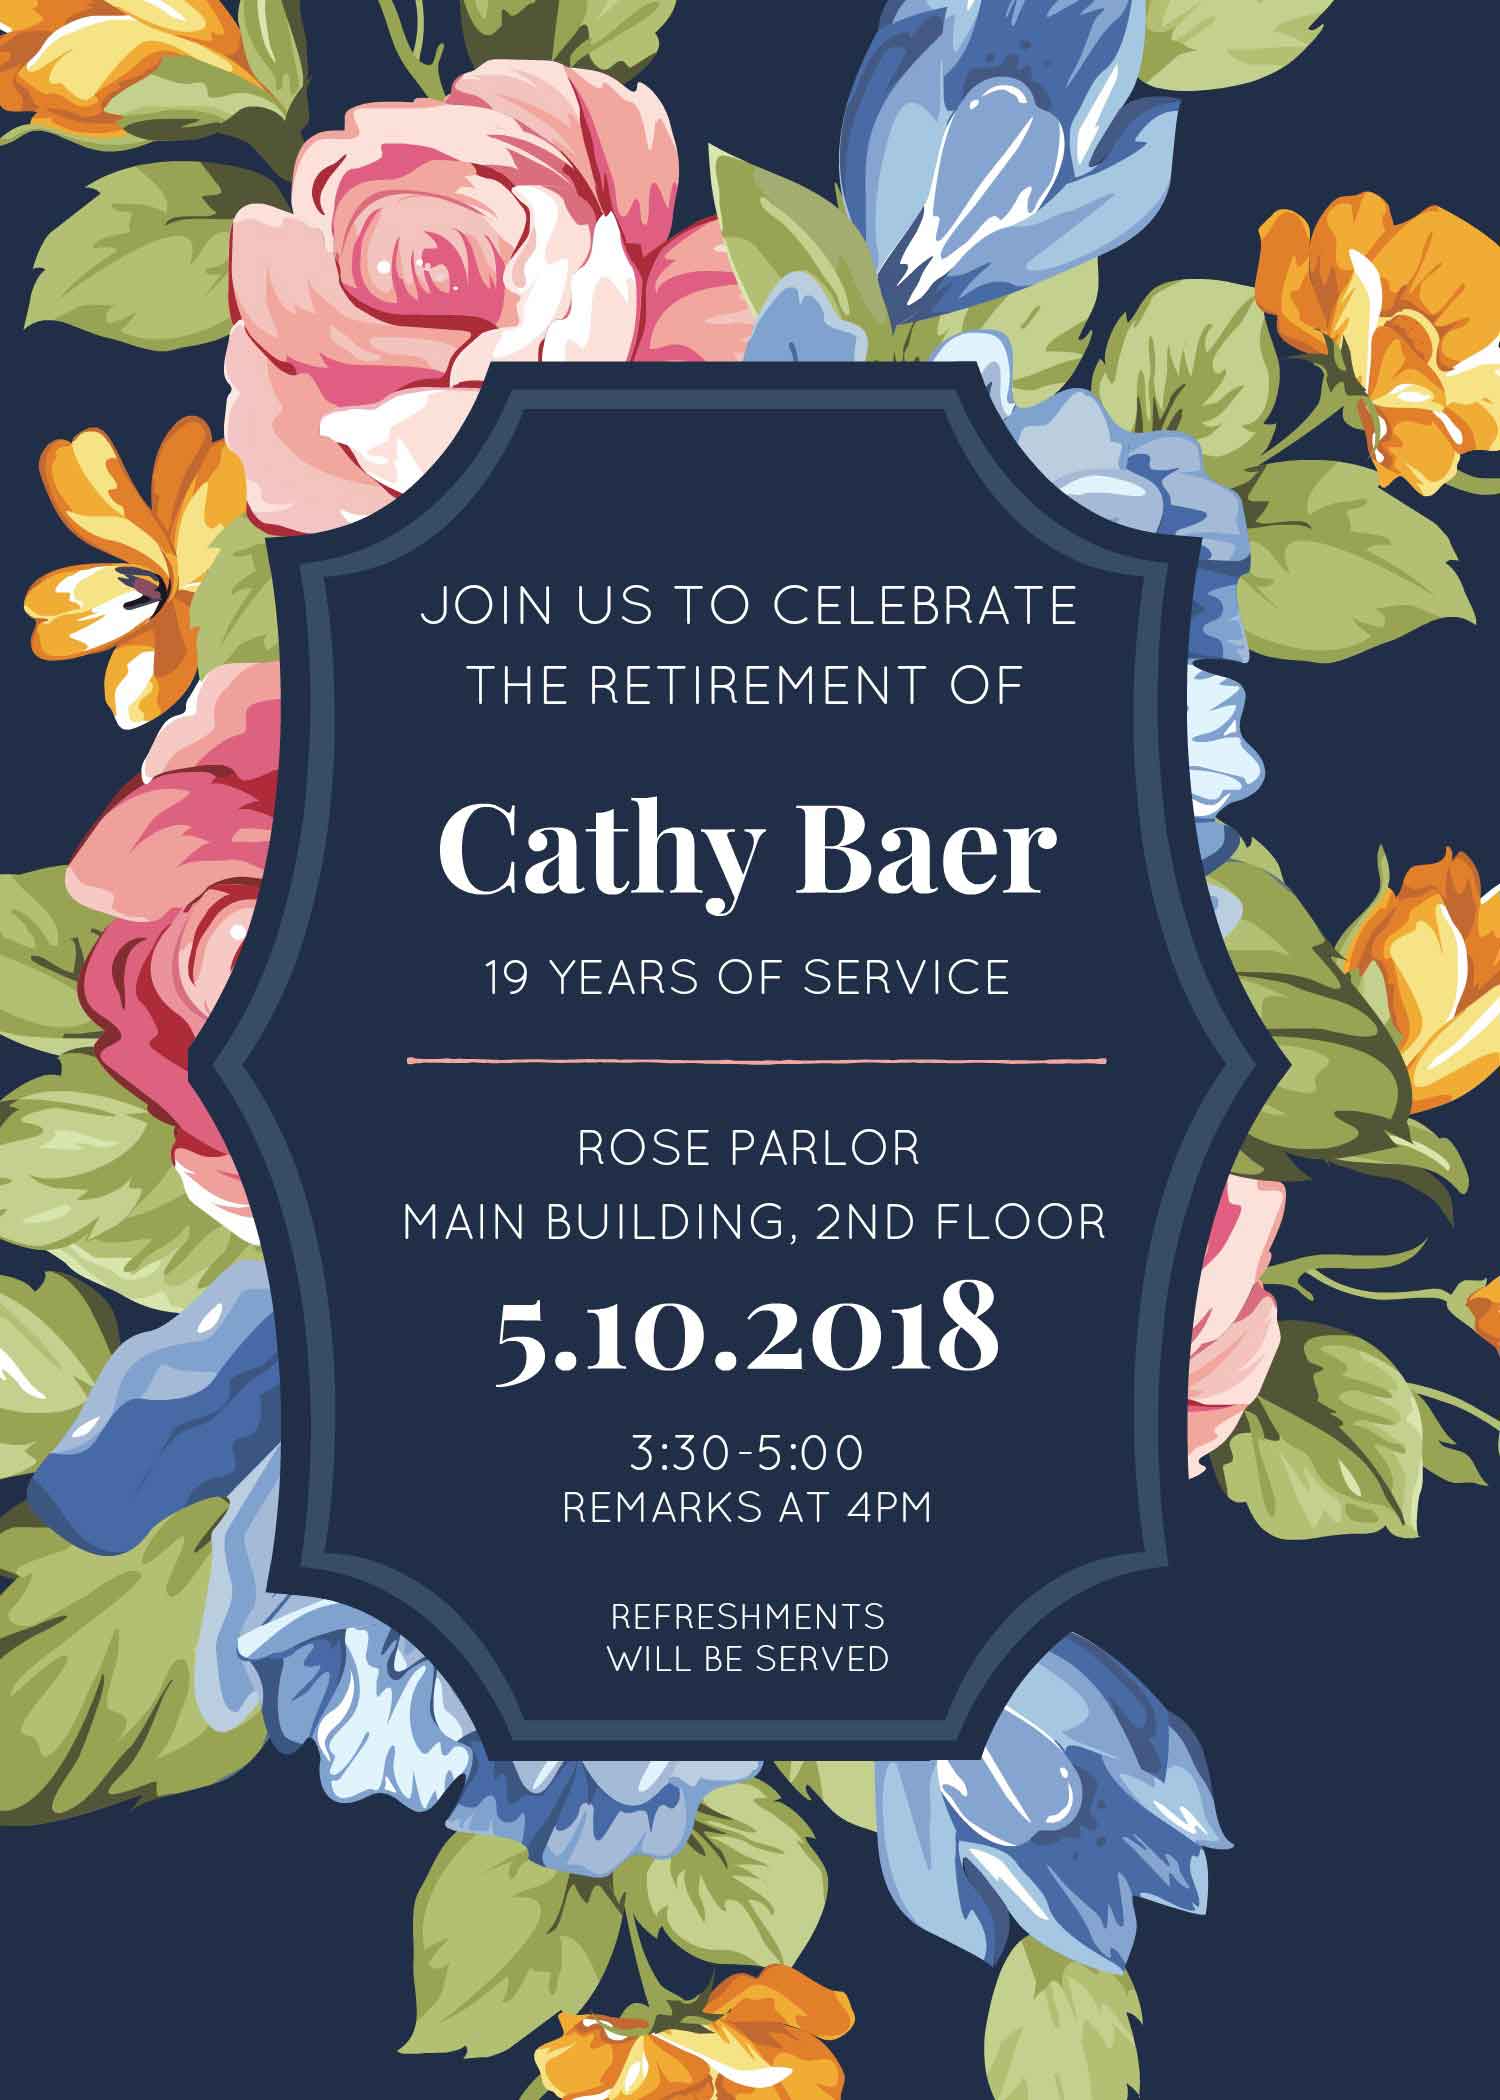 Cathy Baer retirement card